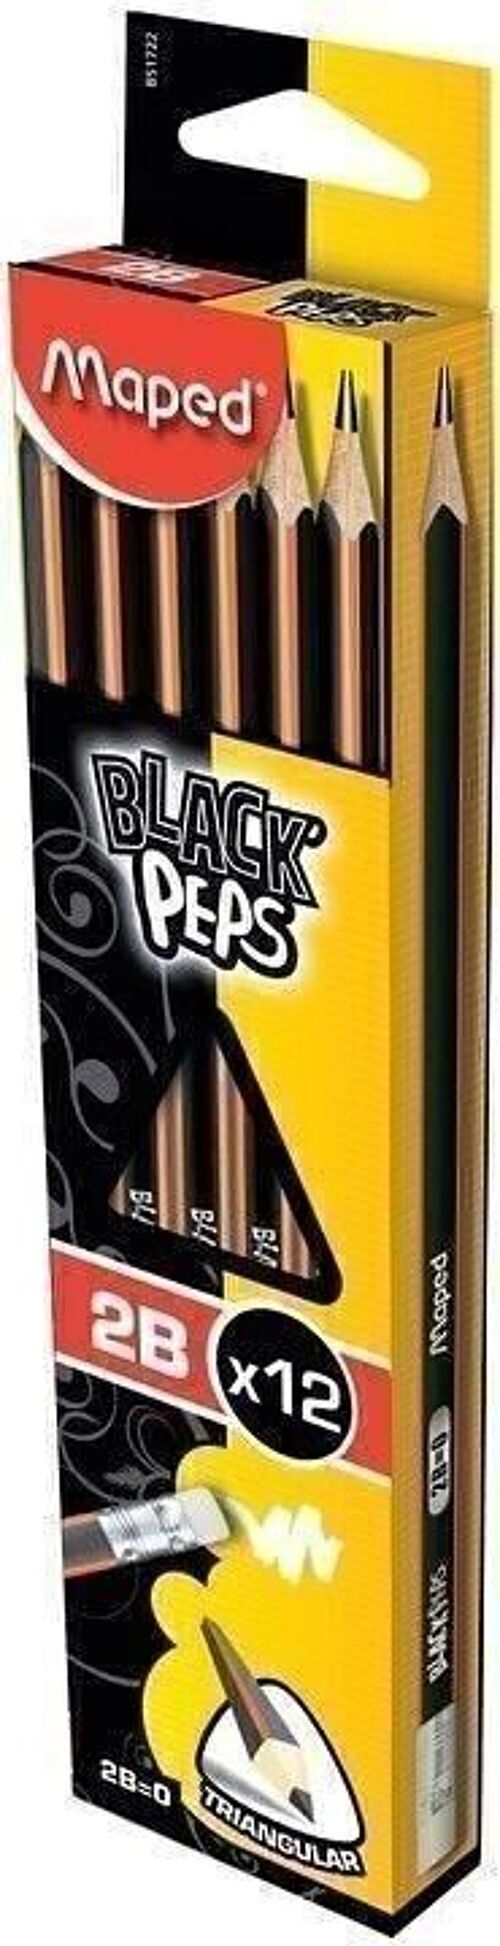 Crayons Graphite embout gomme BLACK'PEPS 2B en boîte carton